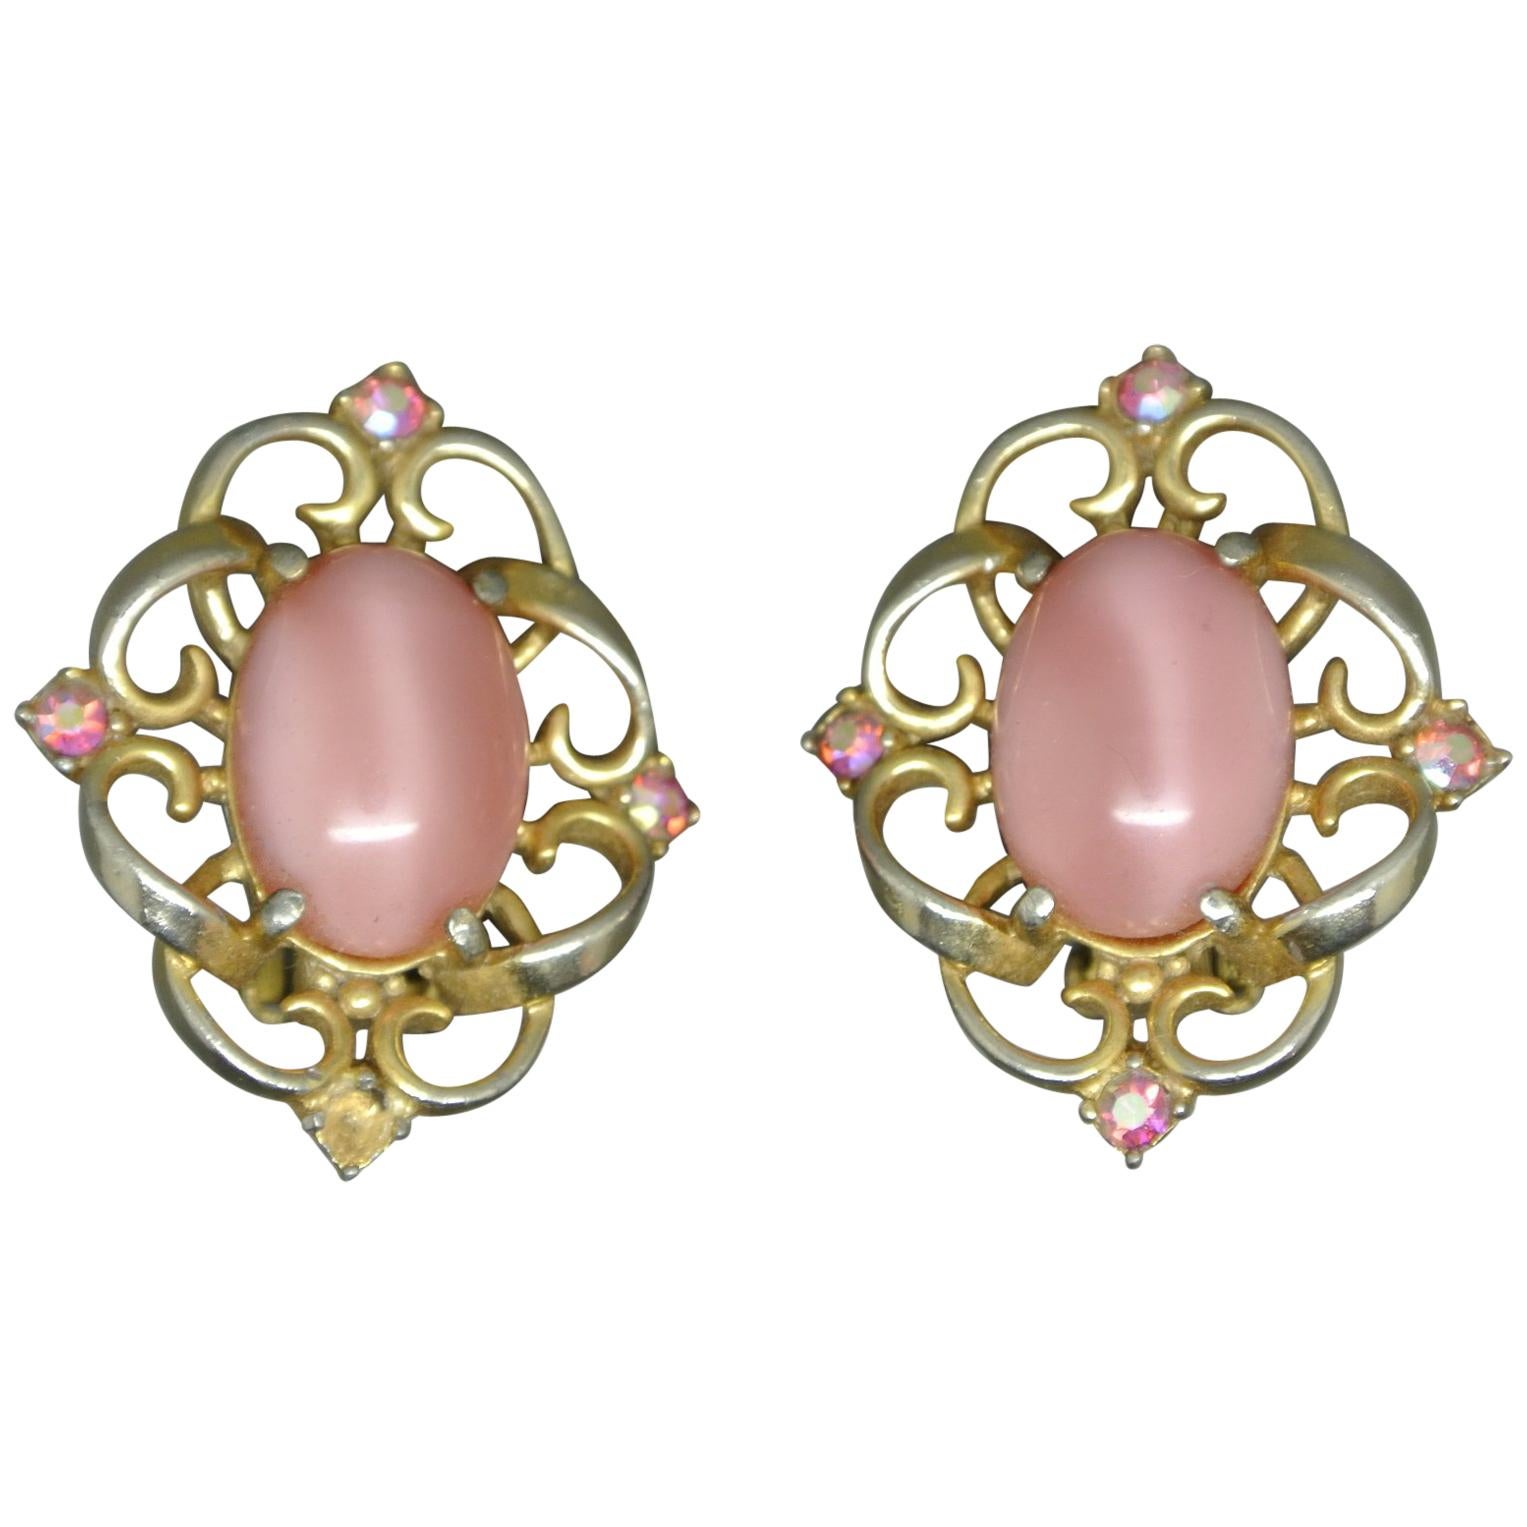 Schiaparelli 1950s pink glass gold-tone earrings For Sale